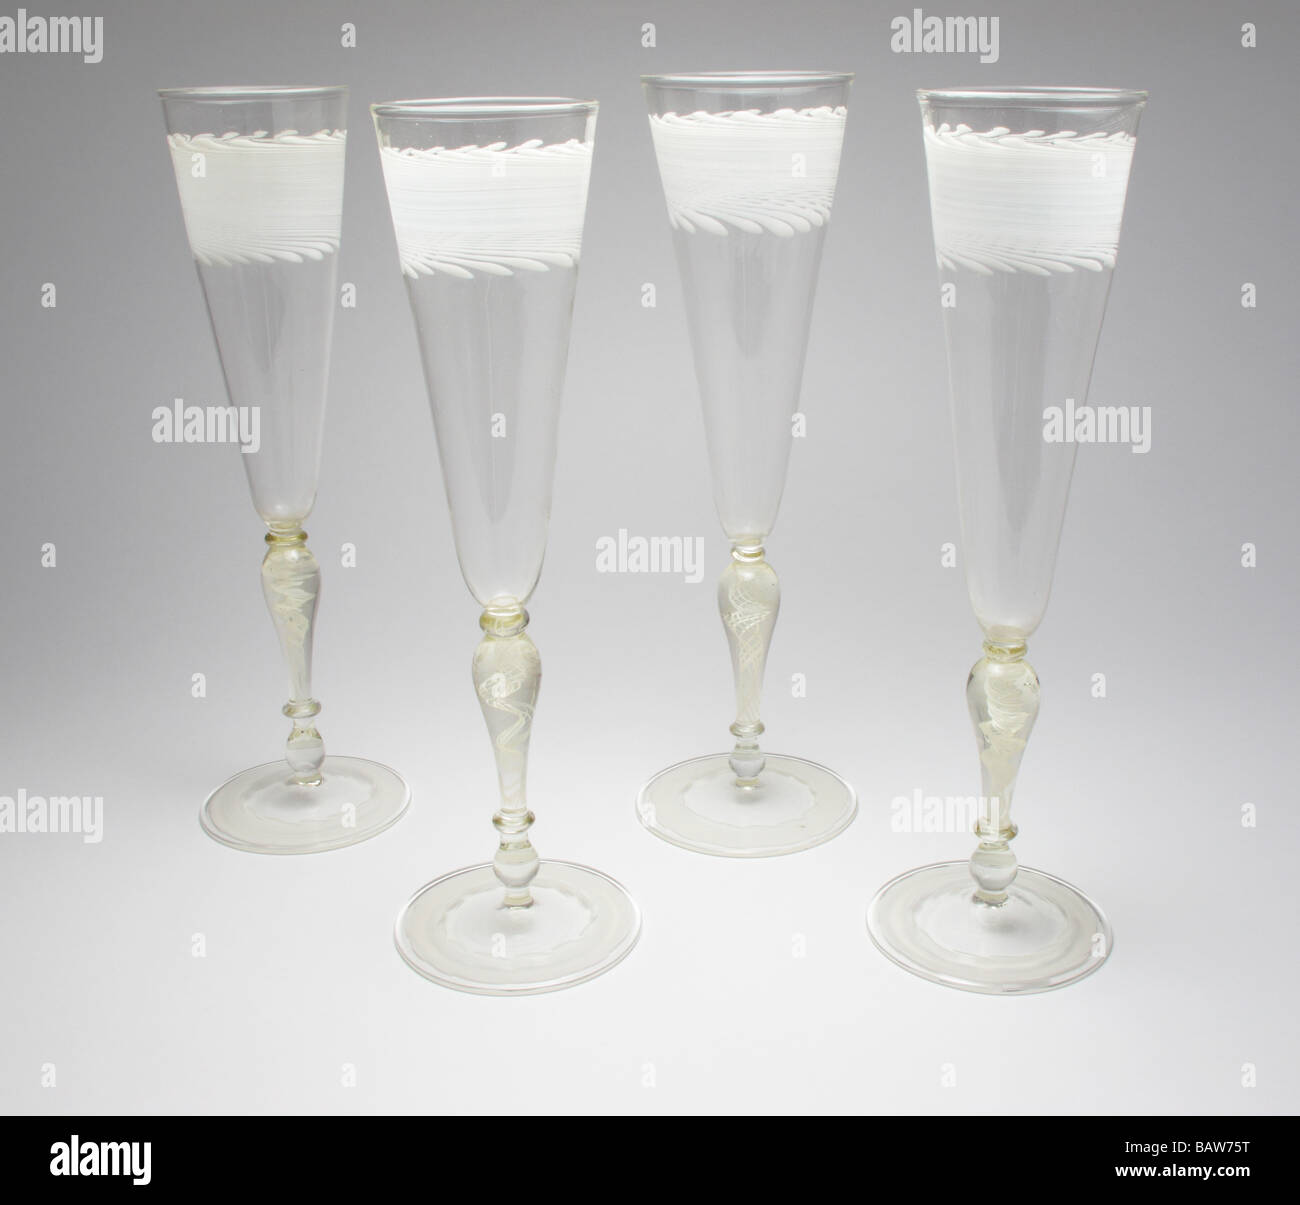 https://c8.alamy.com/comp/BAW75T/antique-art-deco-glass-champagne-flutes-by-bimini-circa-1930-BAW75T.jpg